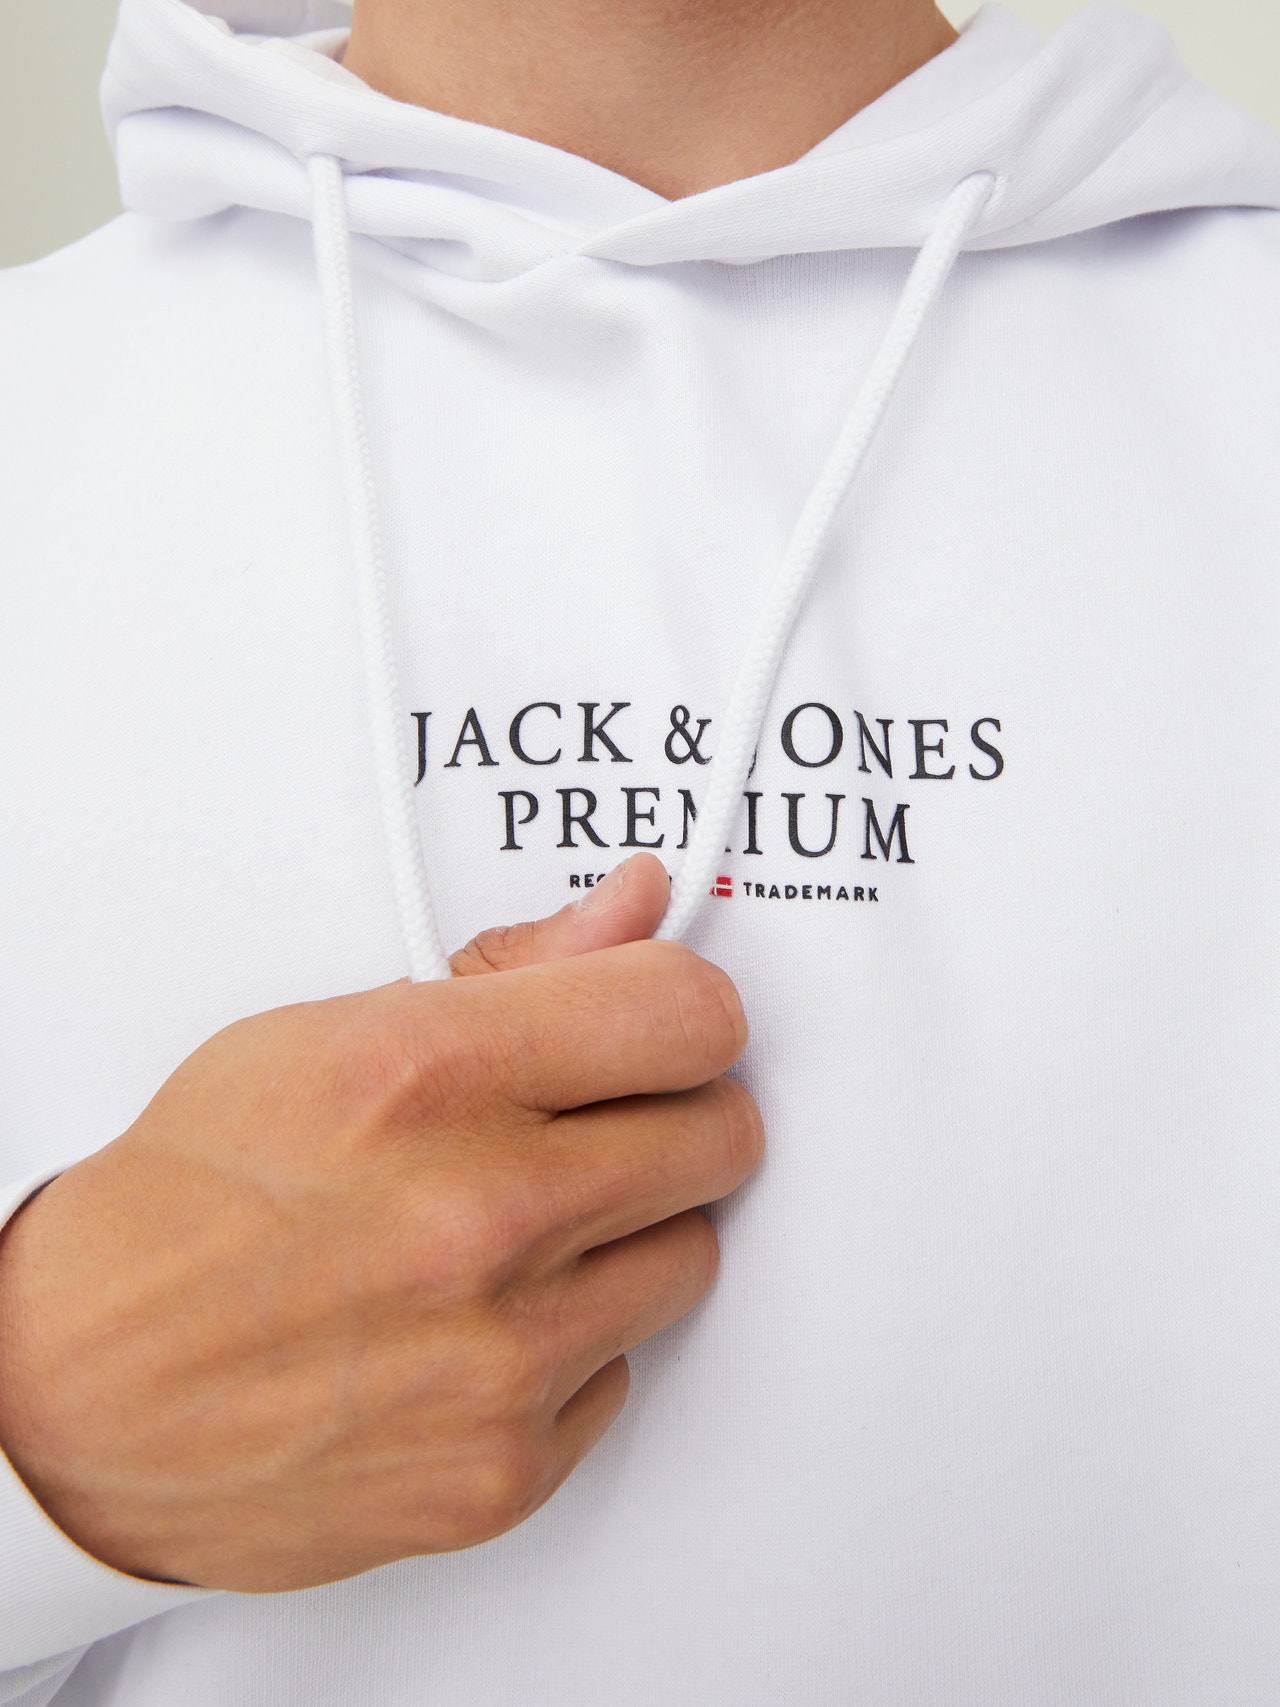 Jack & Jones Logo Hoodie -White - 12216335